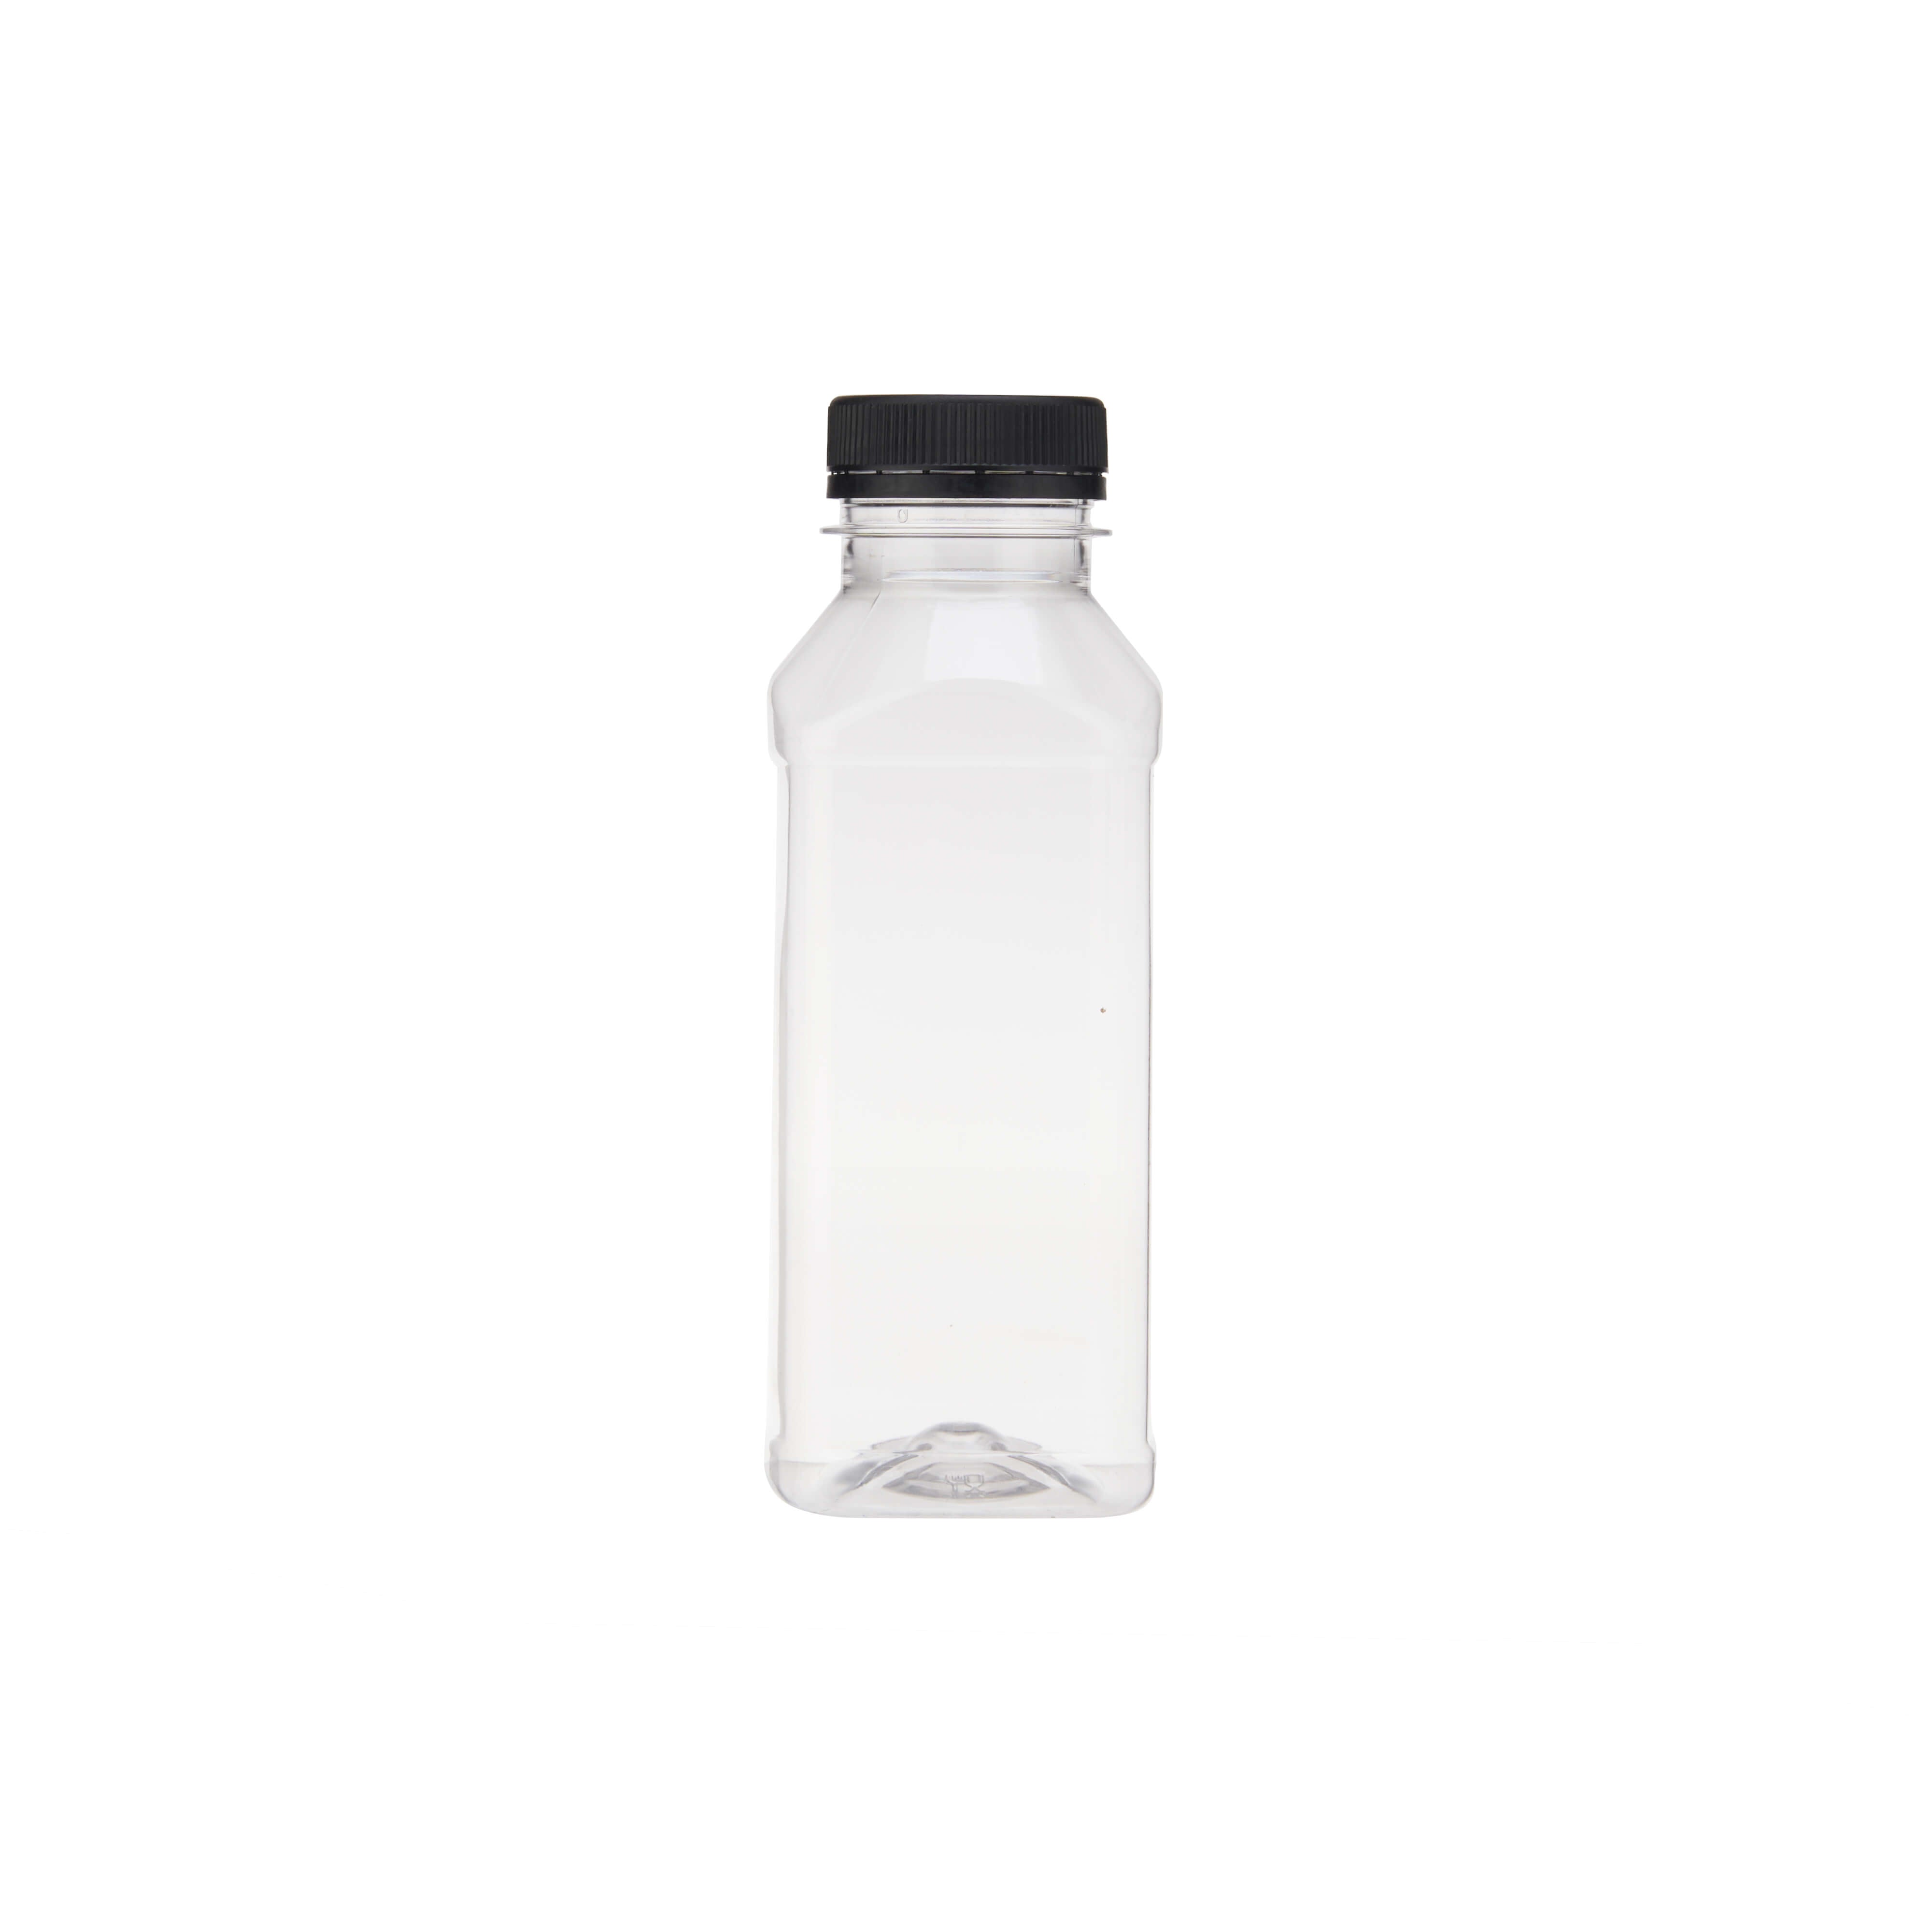 Plastic Square Bottle With Black Cap